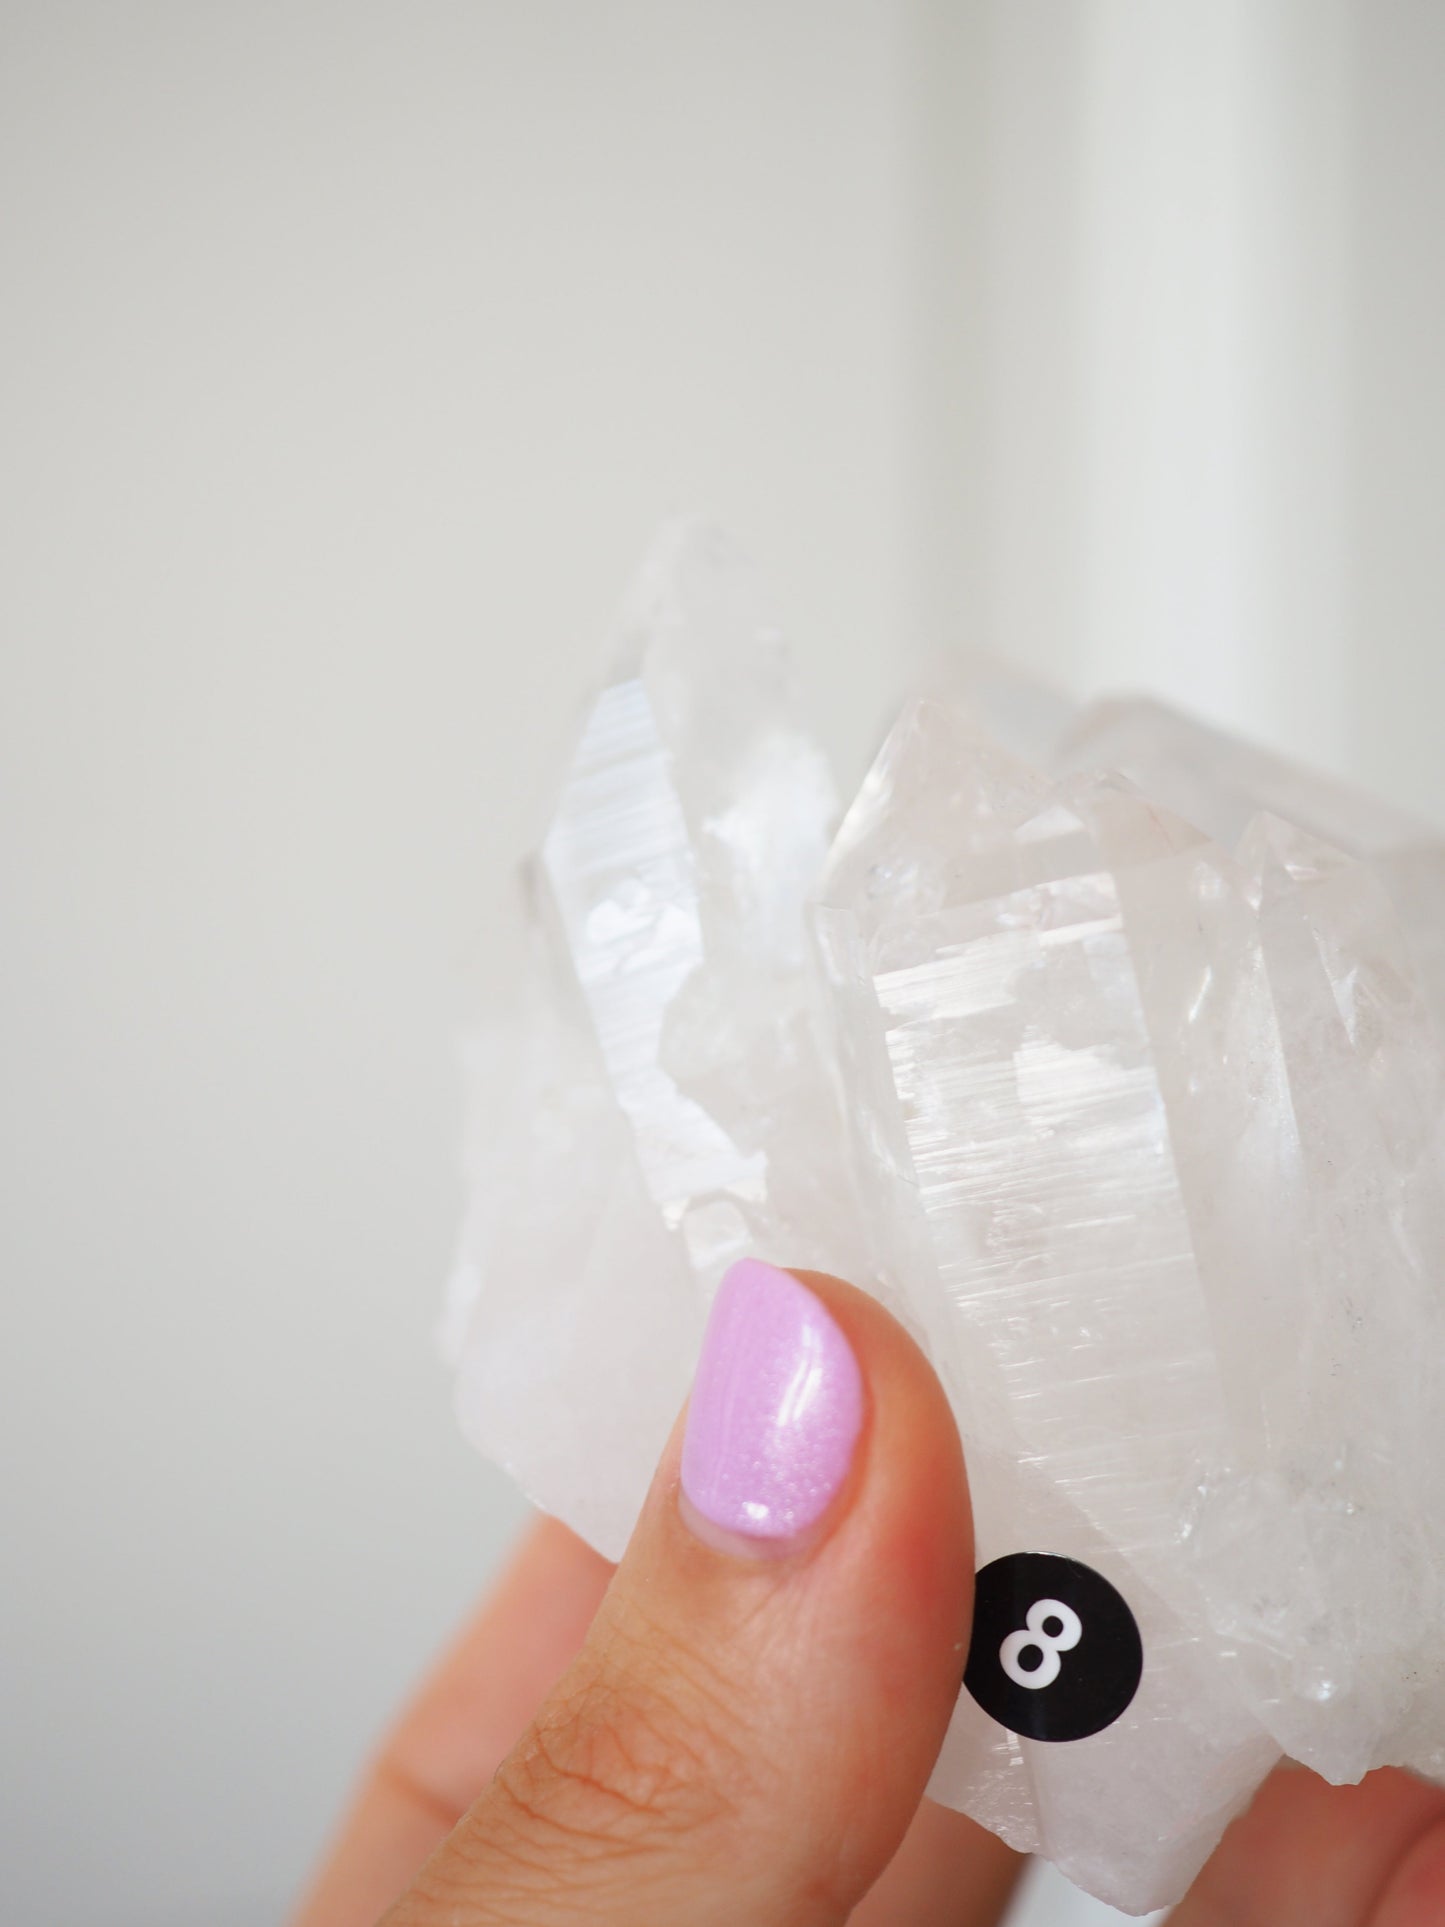 Bergkristall Cluster ca 8cm [8] - aus Minas Gerais Brasilien HIGH QUALITY